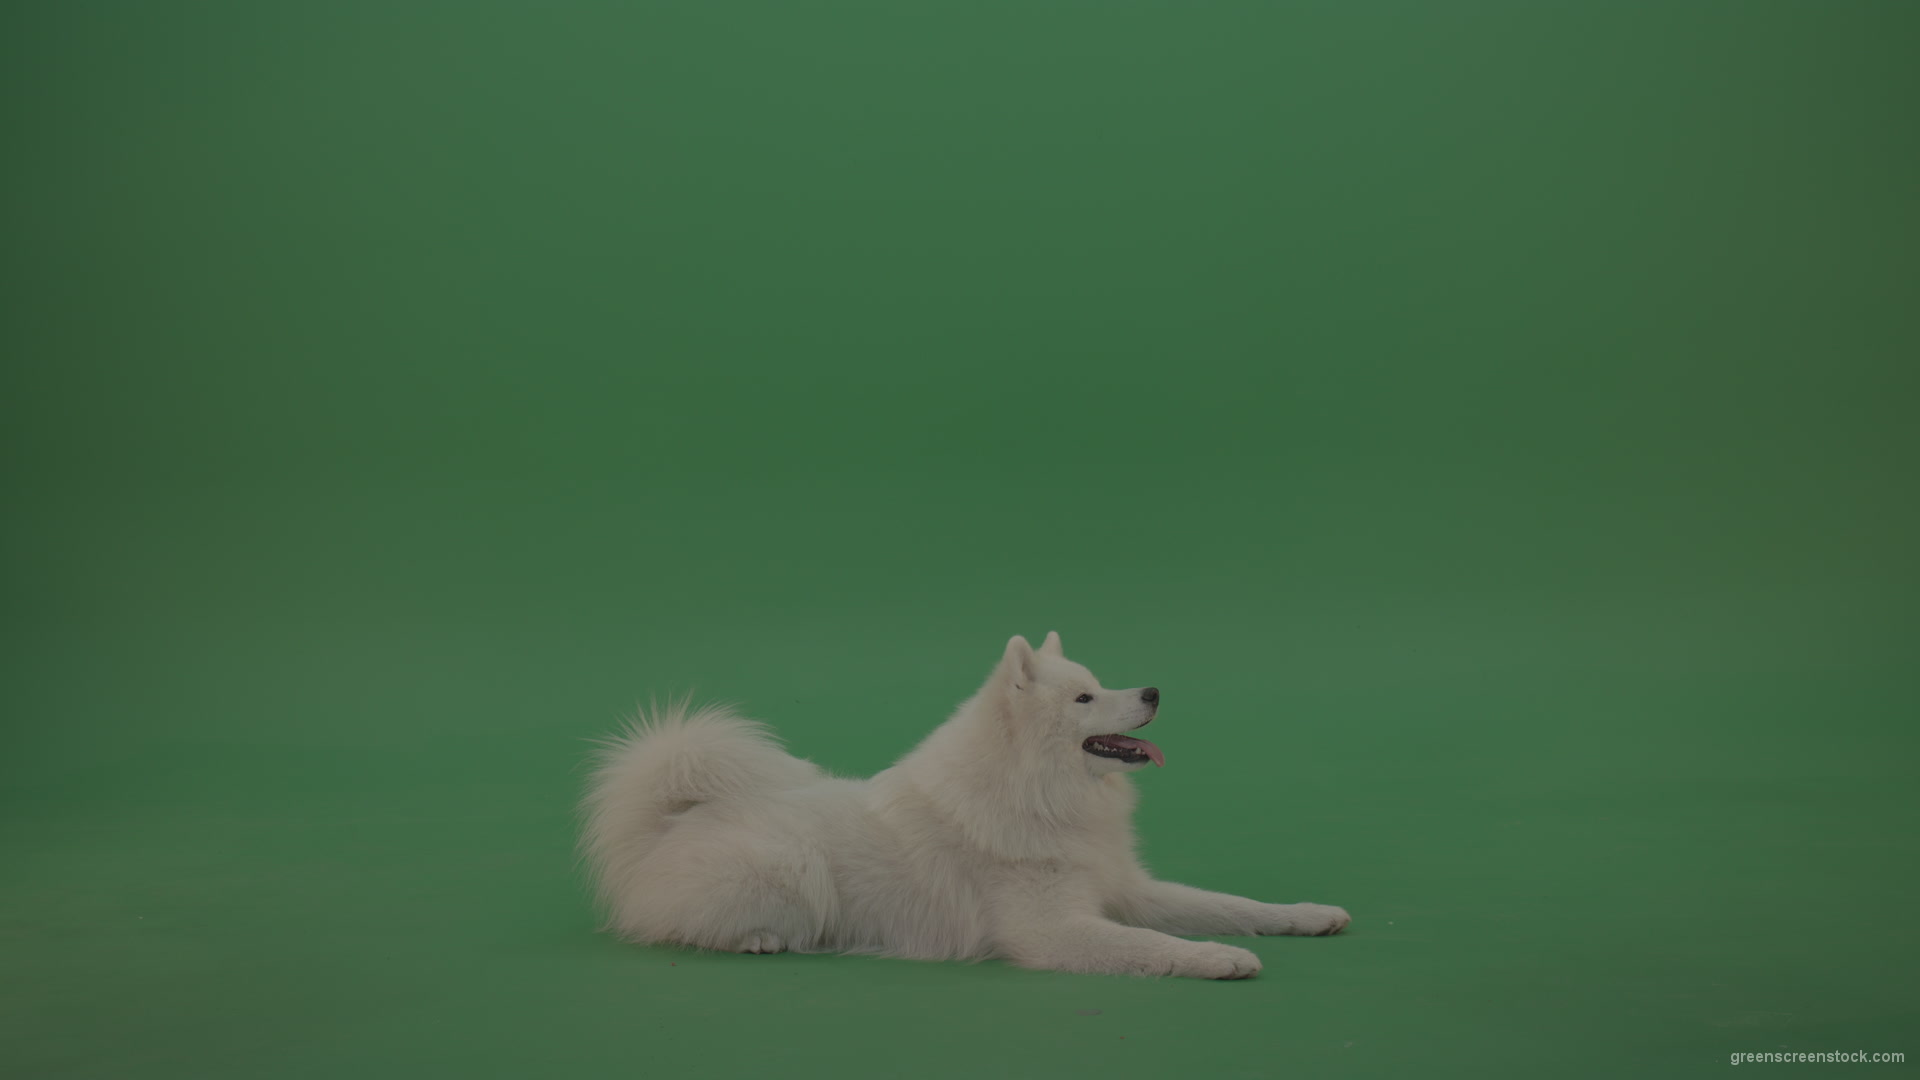 White-Samoyed-Dog-Green-Screen-Stock-5_004 Green Screen Stock